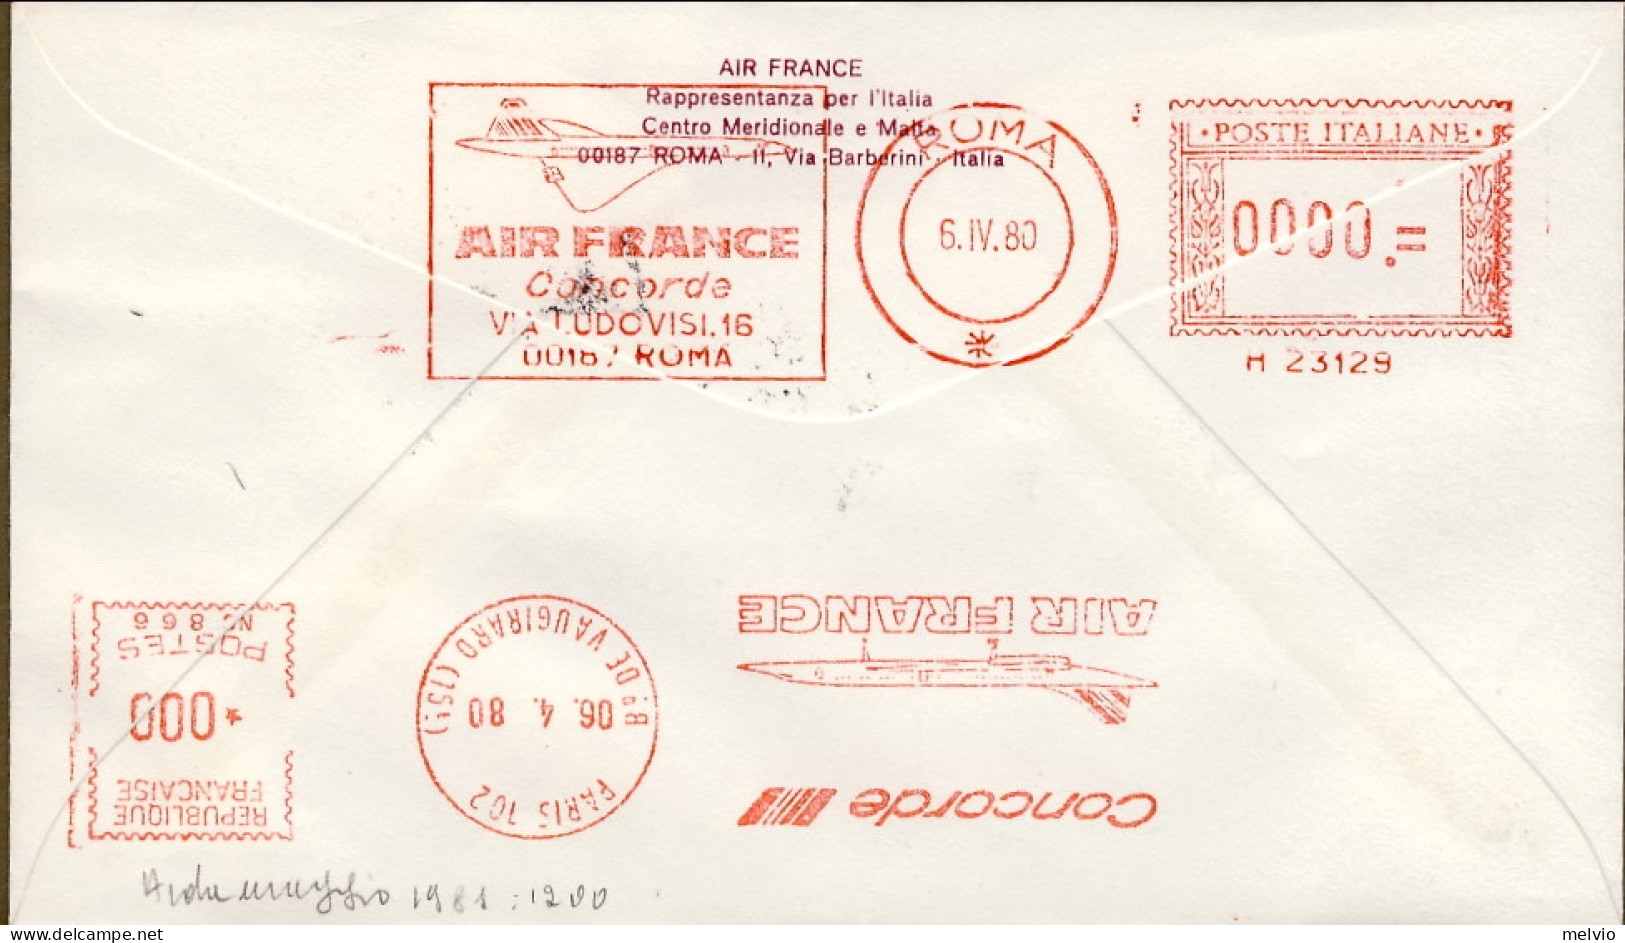 San Marino-1980 I^volo Airbus Roma Parigi Della Air France - Poste Aérienne